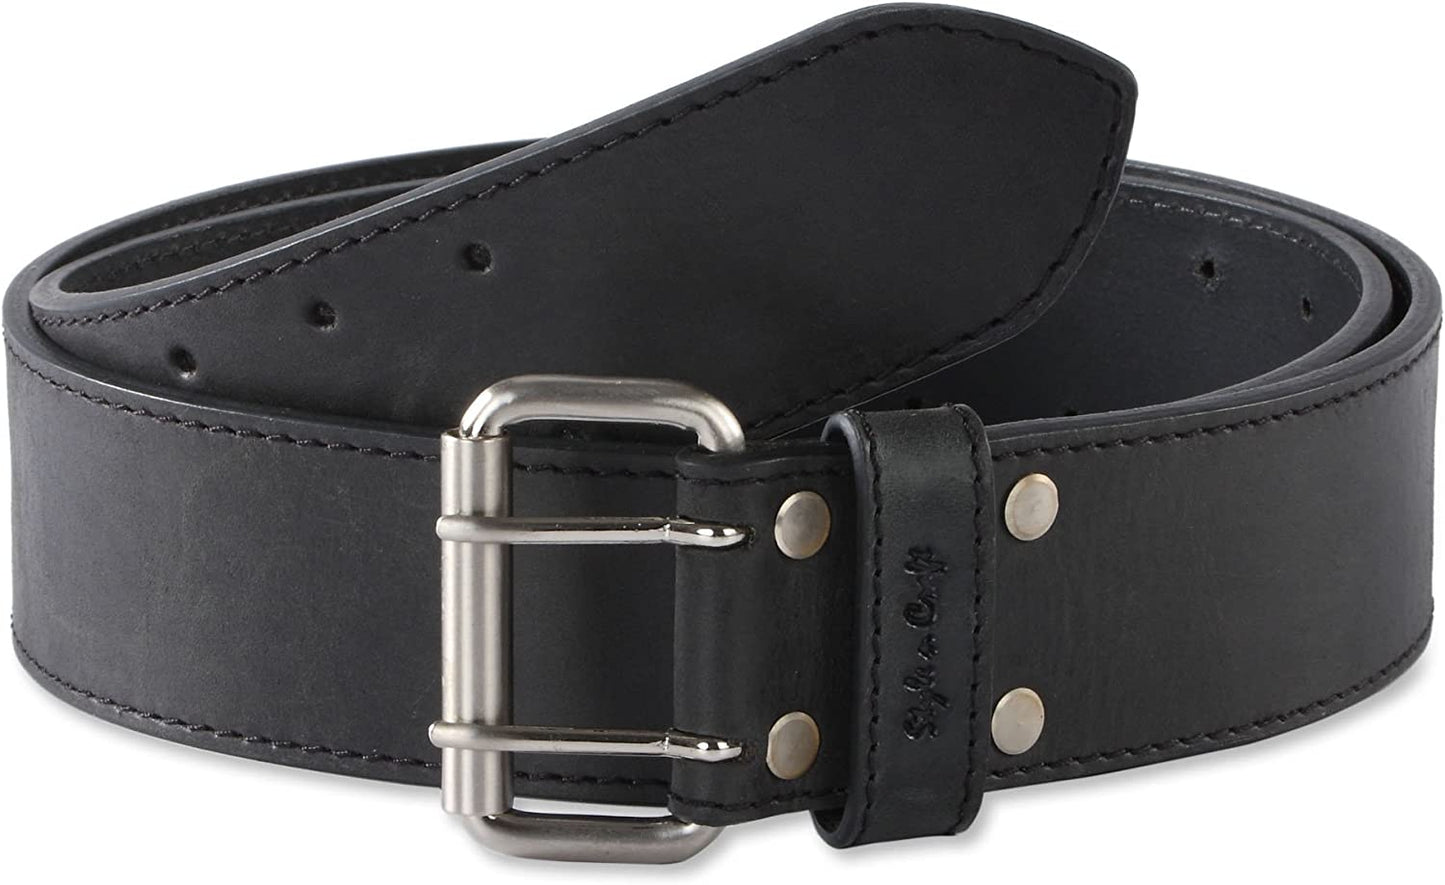 Style n Craft 392752 2-Inch Work Belt in Heavy Top Grain Hunter Leather, Black